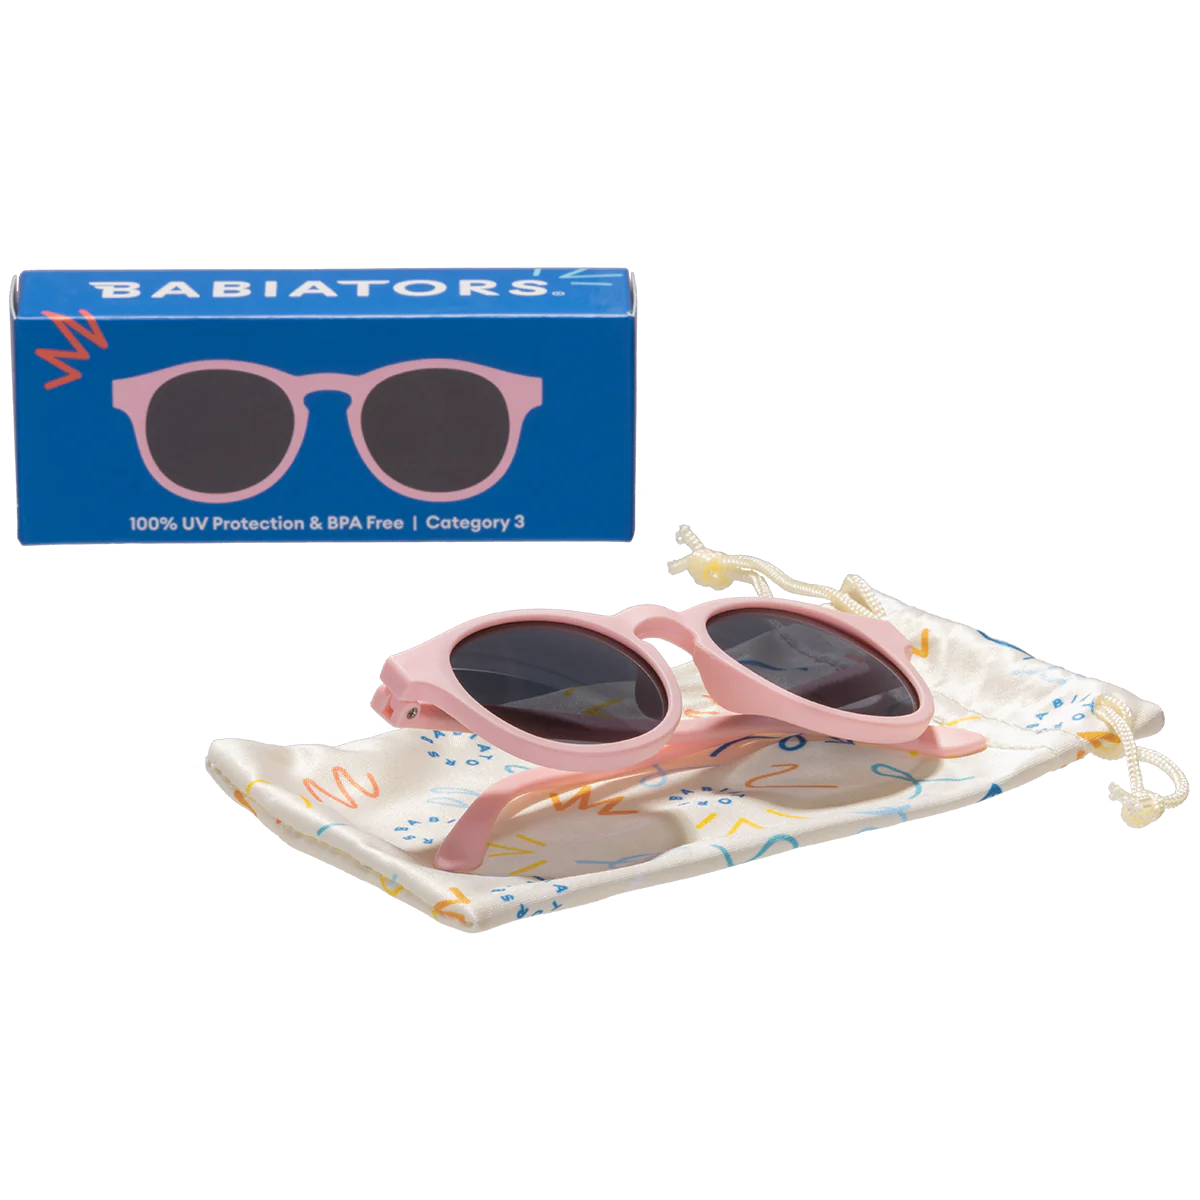 Babiators Original Keyholes - Ballerina Pink Sunglasses Babiators 